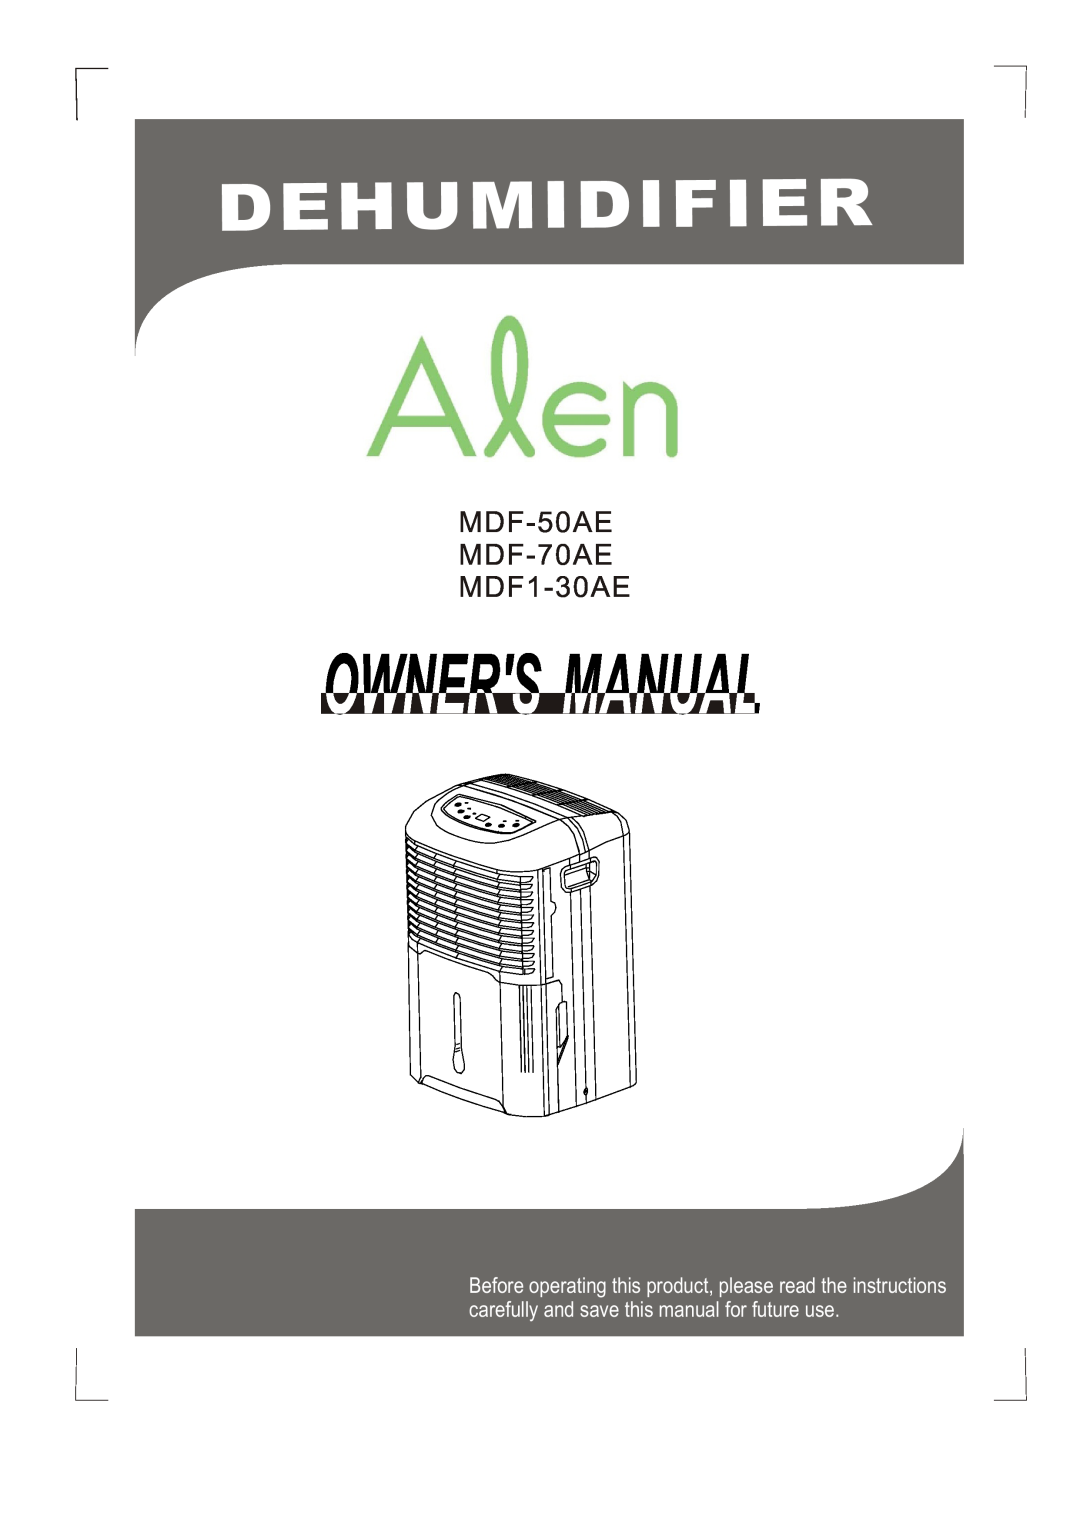 Alen manual Dehumidifier, MDF-50AE MDF-70AE MDF1-30AE, carefully and save this manual for future use 